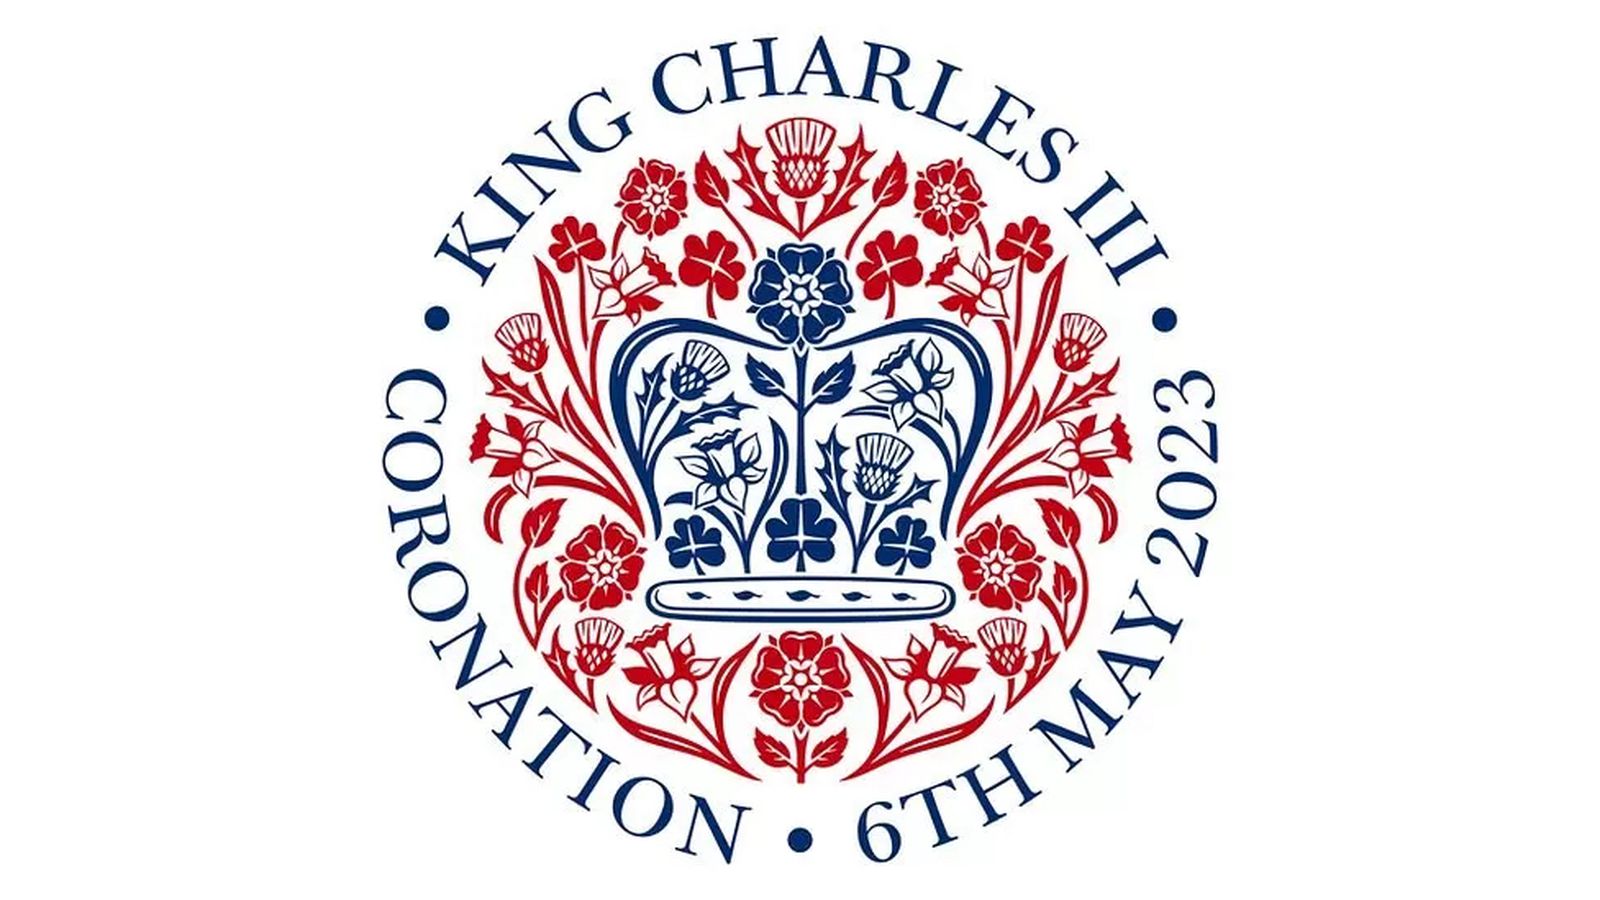 Apple's Former Design Chief Jony Ive Designs Emblem for Coronation of King Charles III - macrumors.com